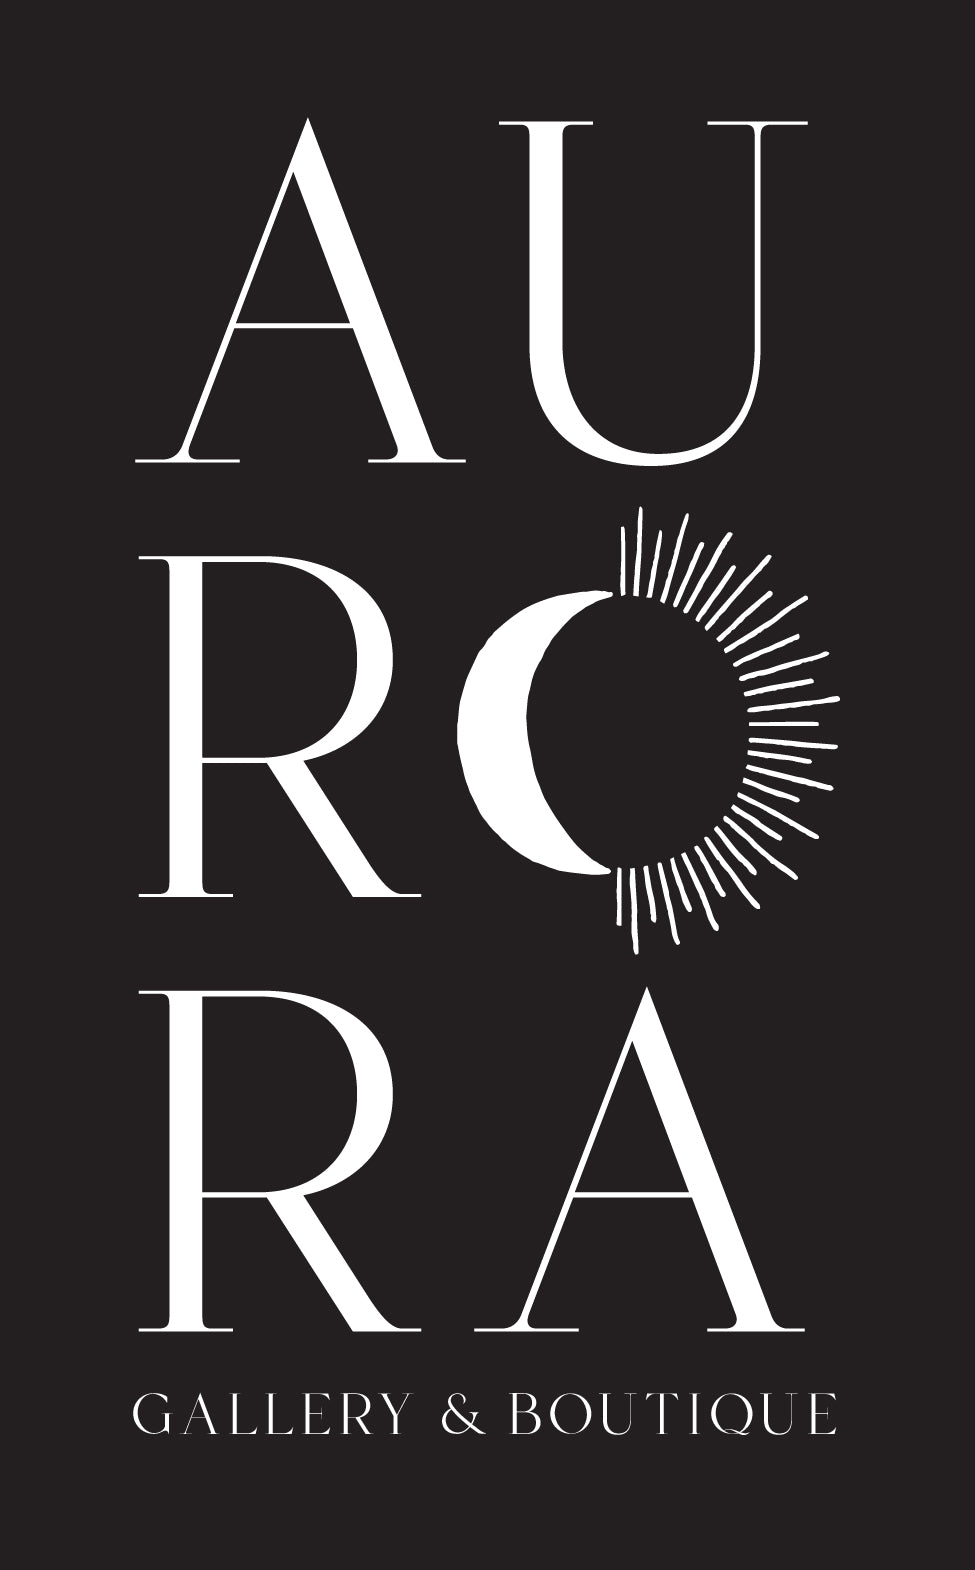 Aurora Gallery and Boutique – Aurora Gallery & Boutique